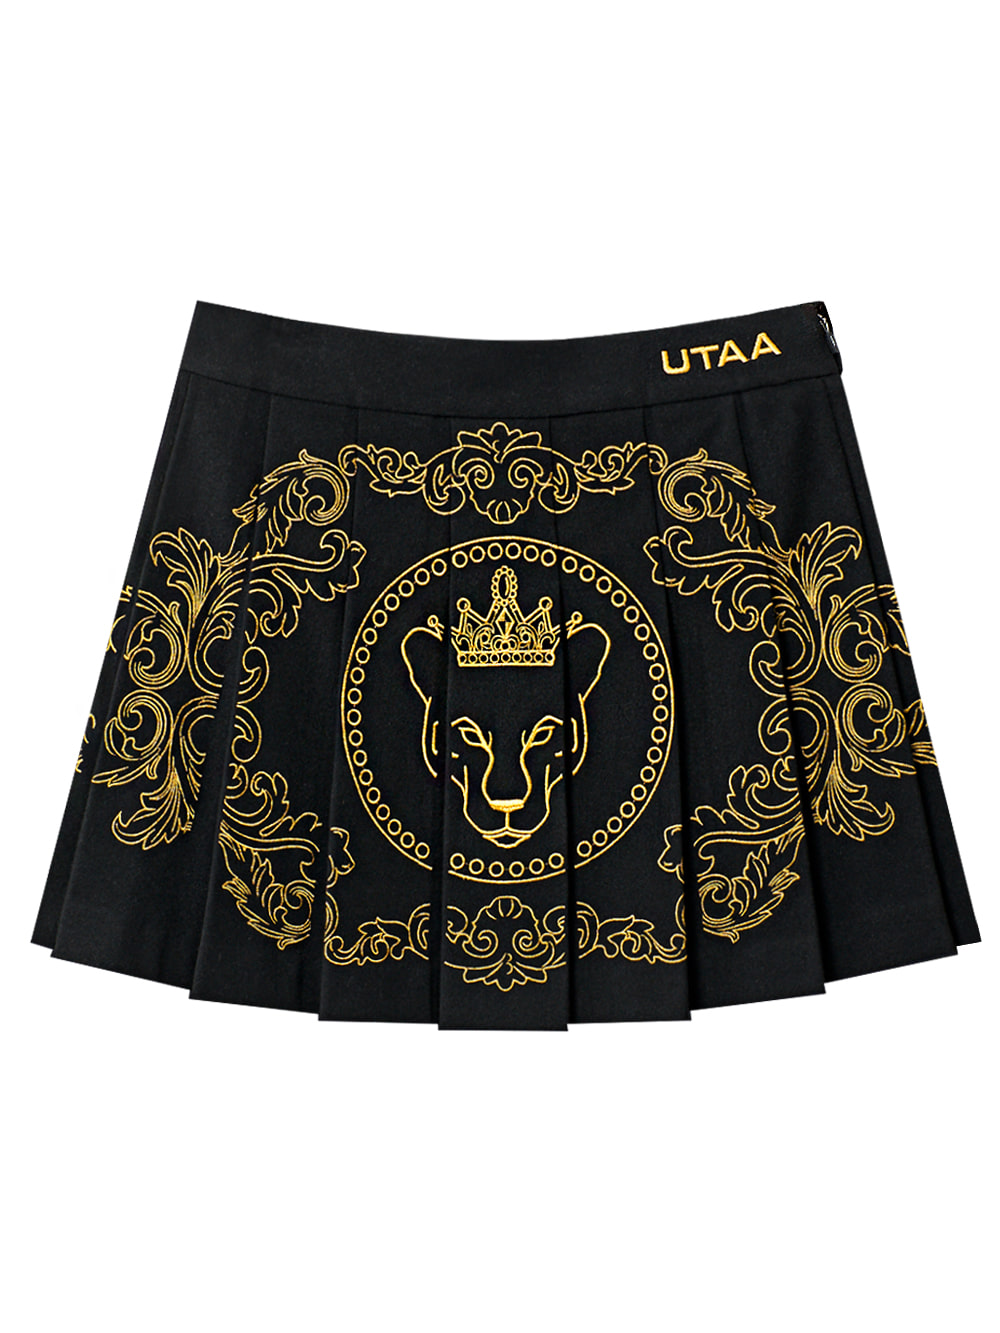 UTAA Imperial Gold Panther Skirt : Black(UC1SKF163BK)